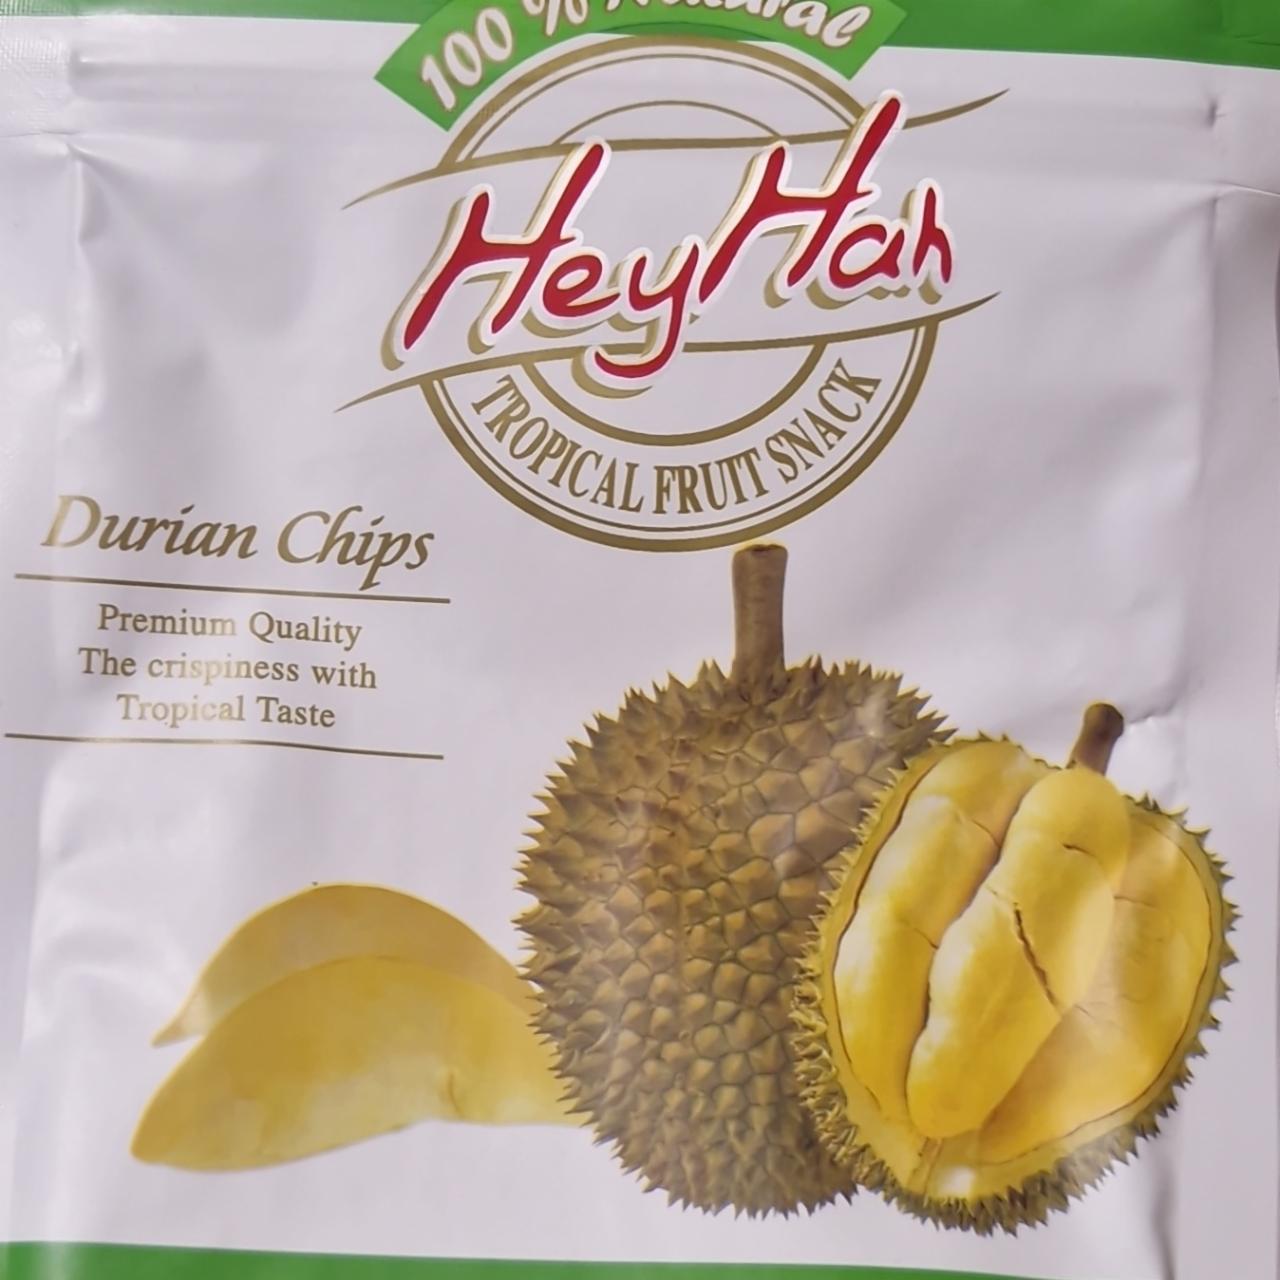 Fotografie - Durian Chips Tropical fruit Snack HeyHah